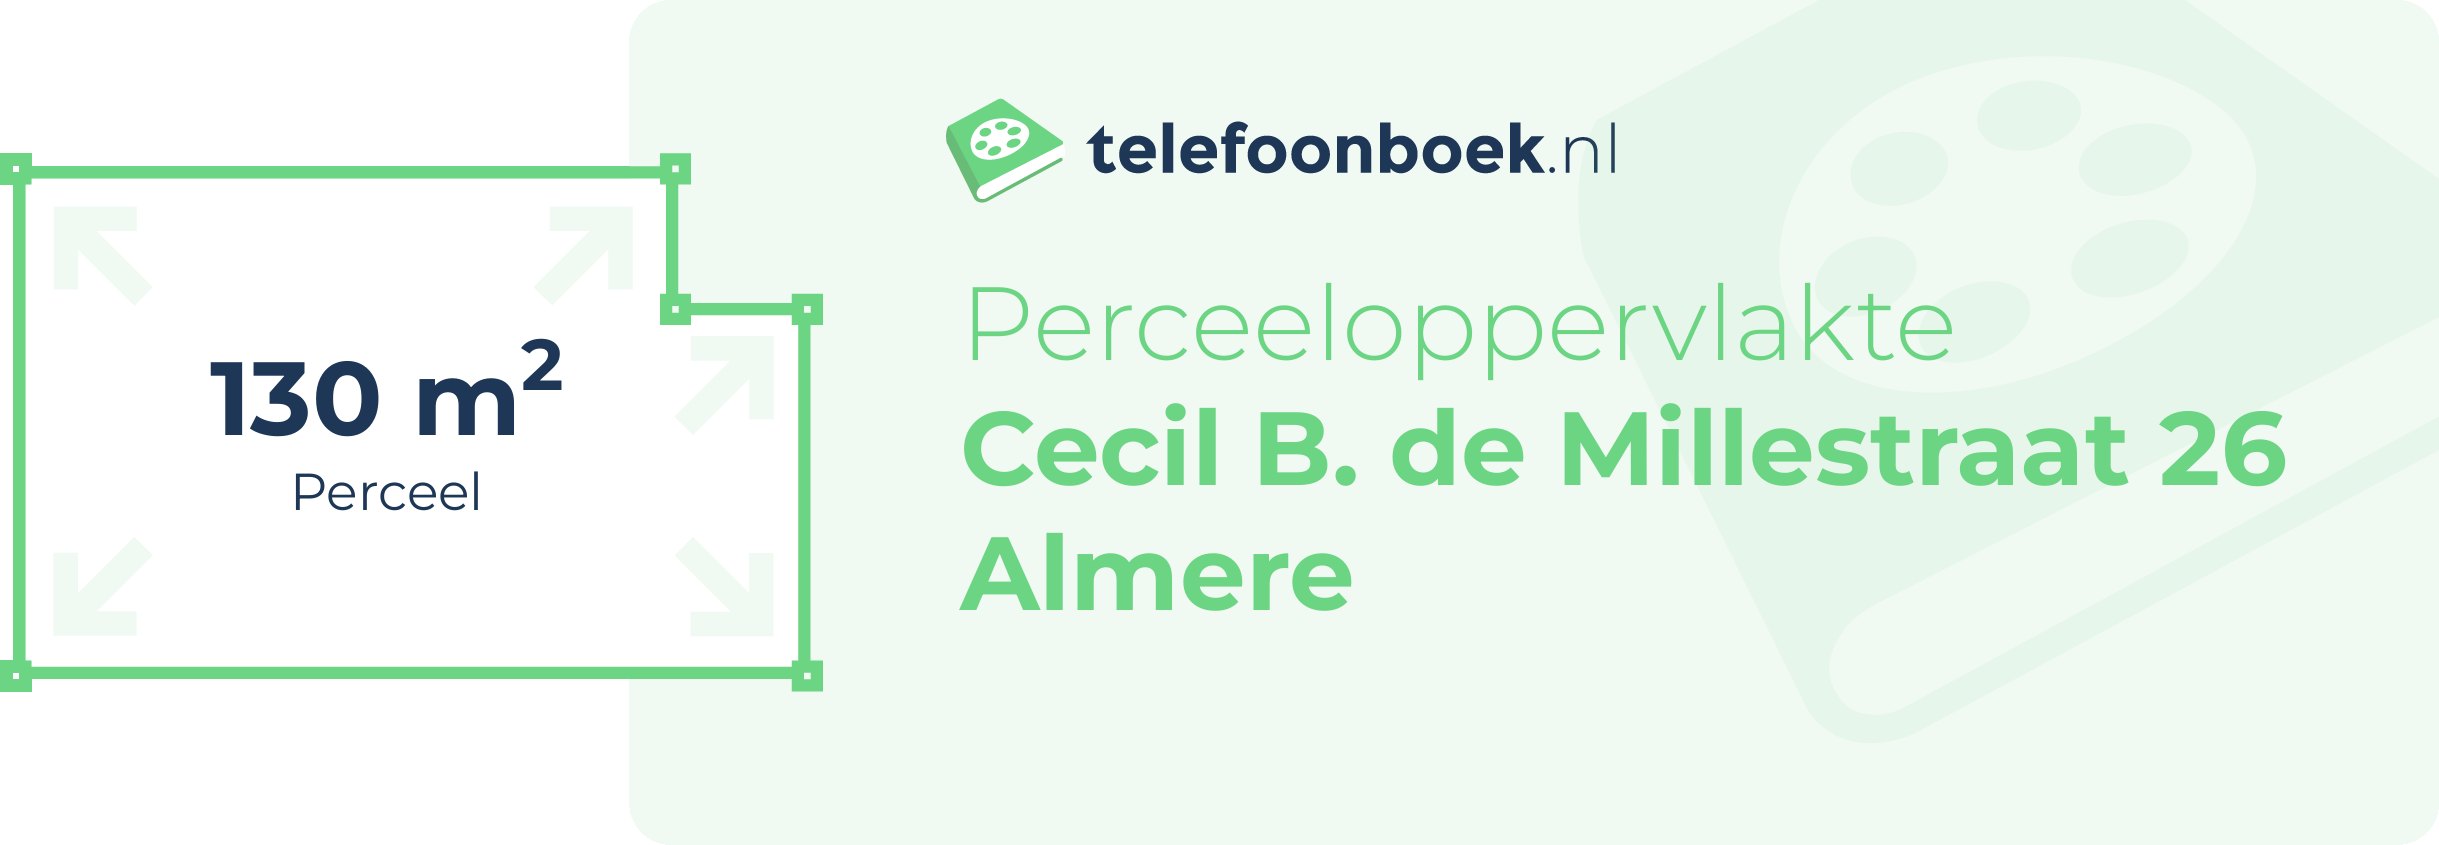 Perceeloppervlakte Cecil B. De Millestraat 26 Almere